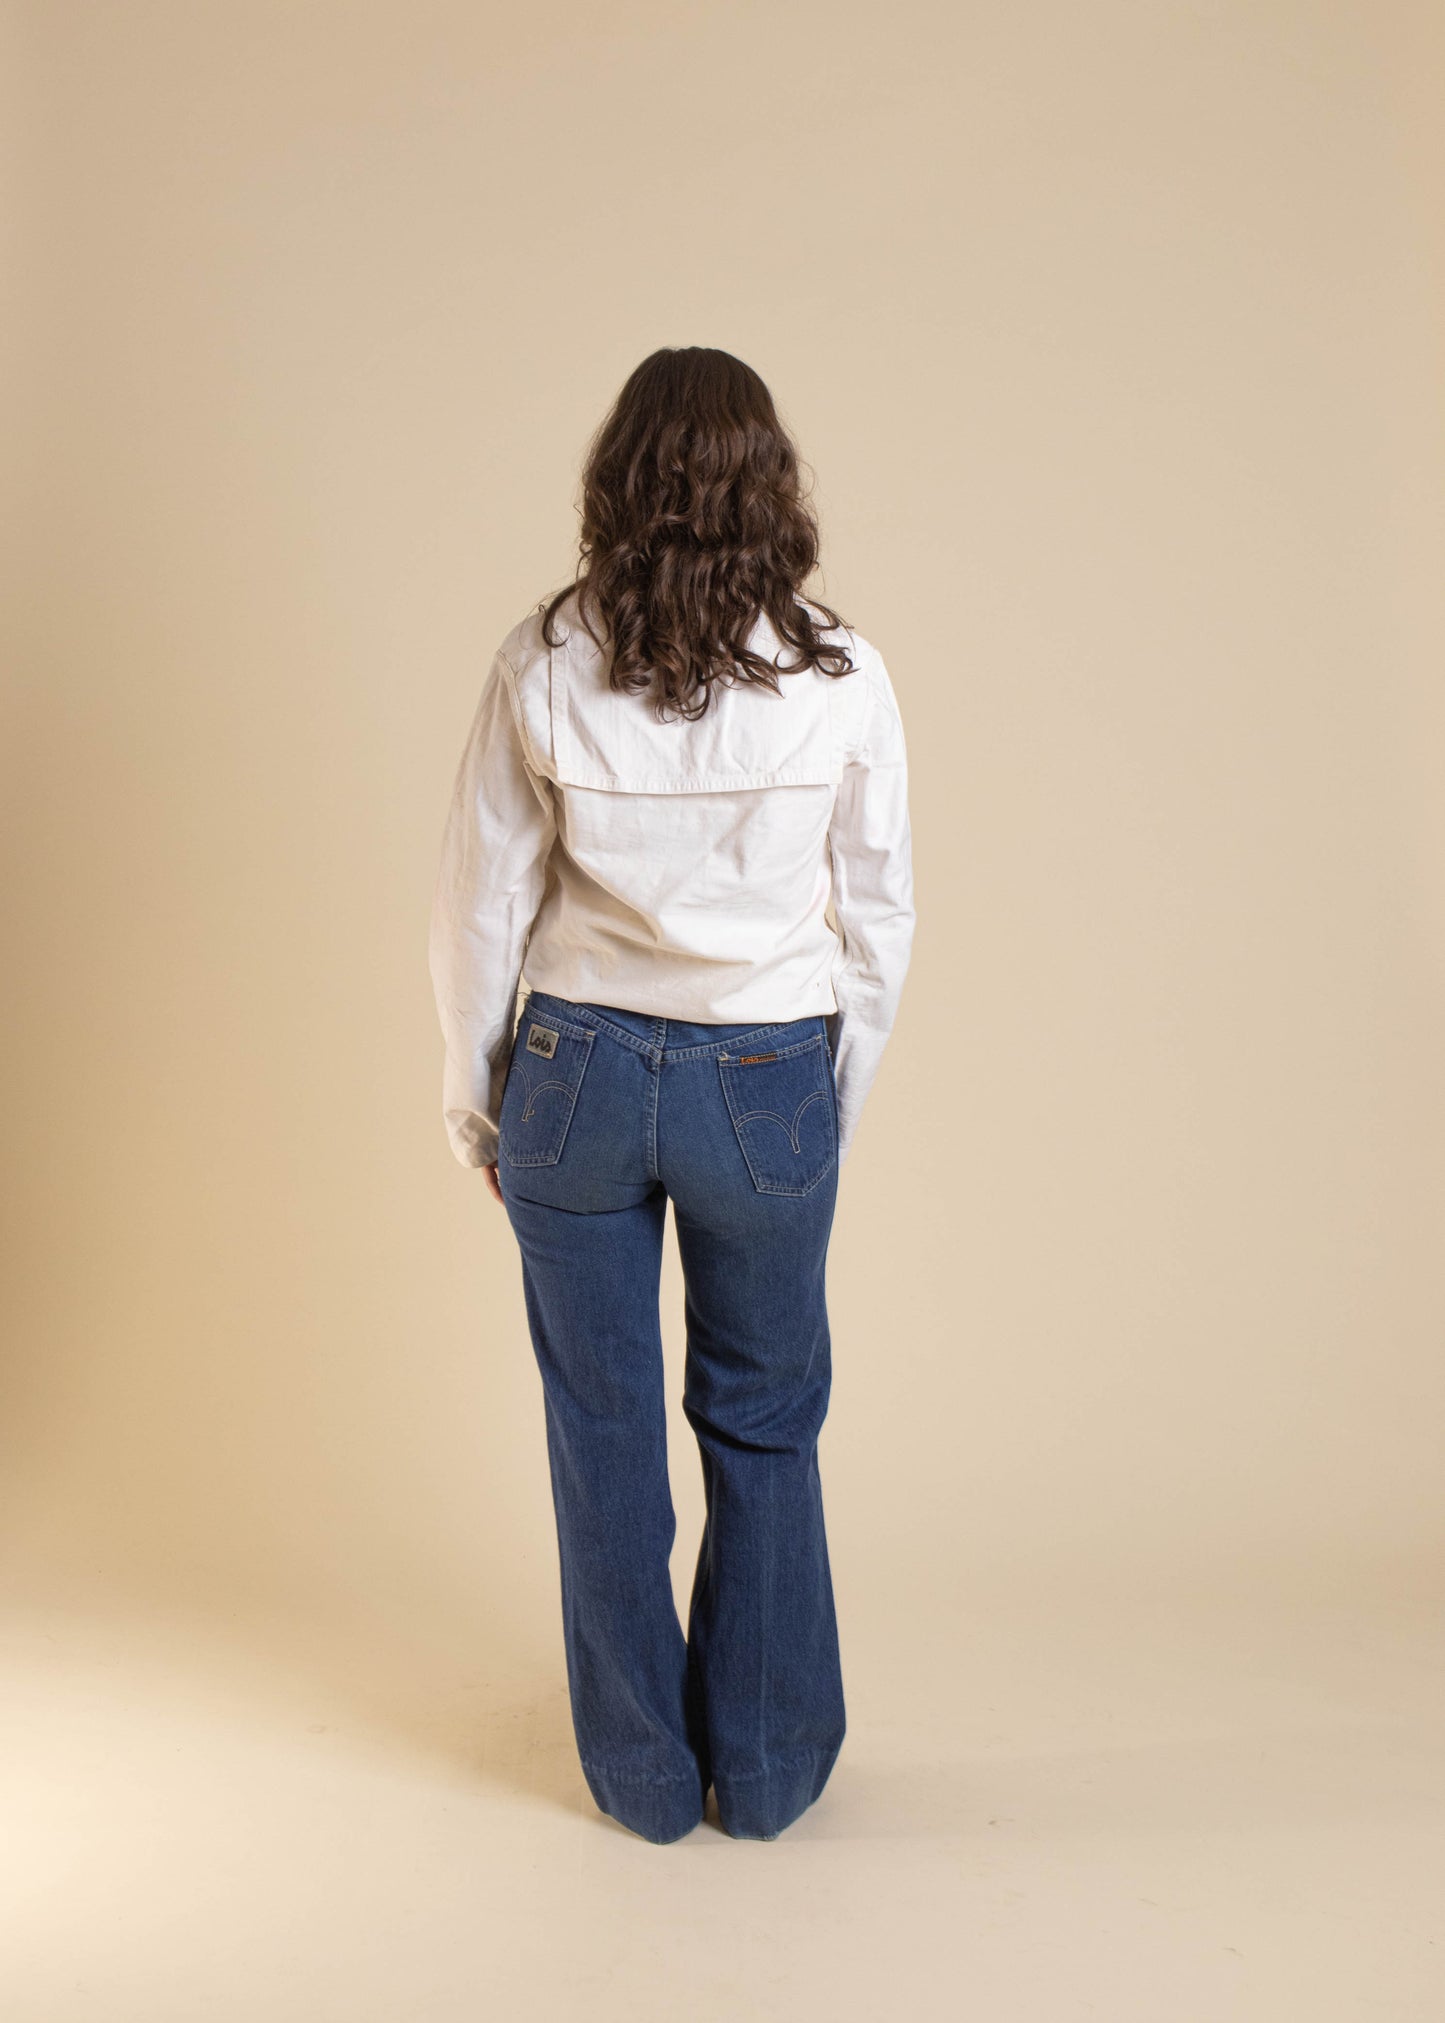 1980s Lois Darkwash Flare Jeans Size Women's 29 Men's 32